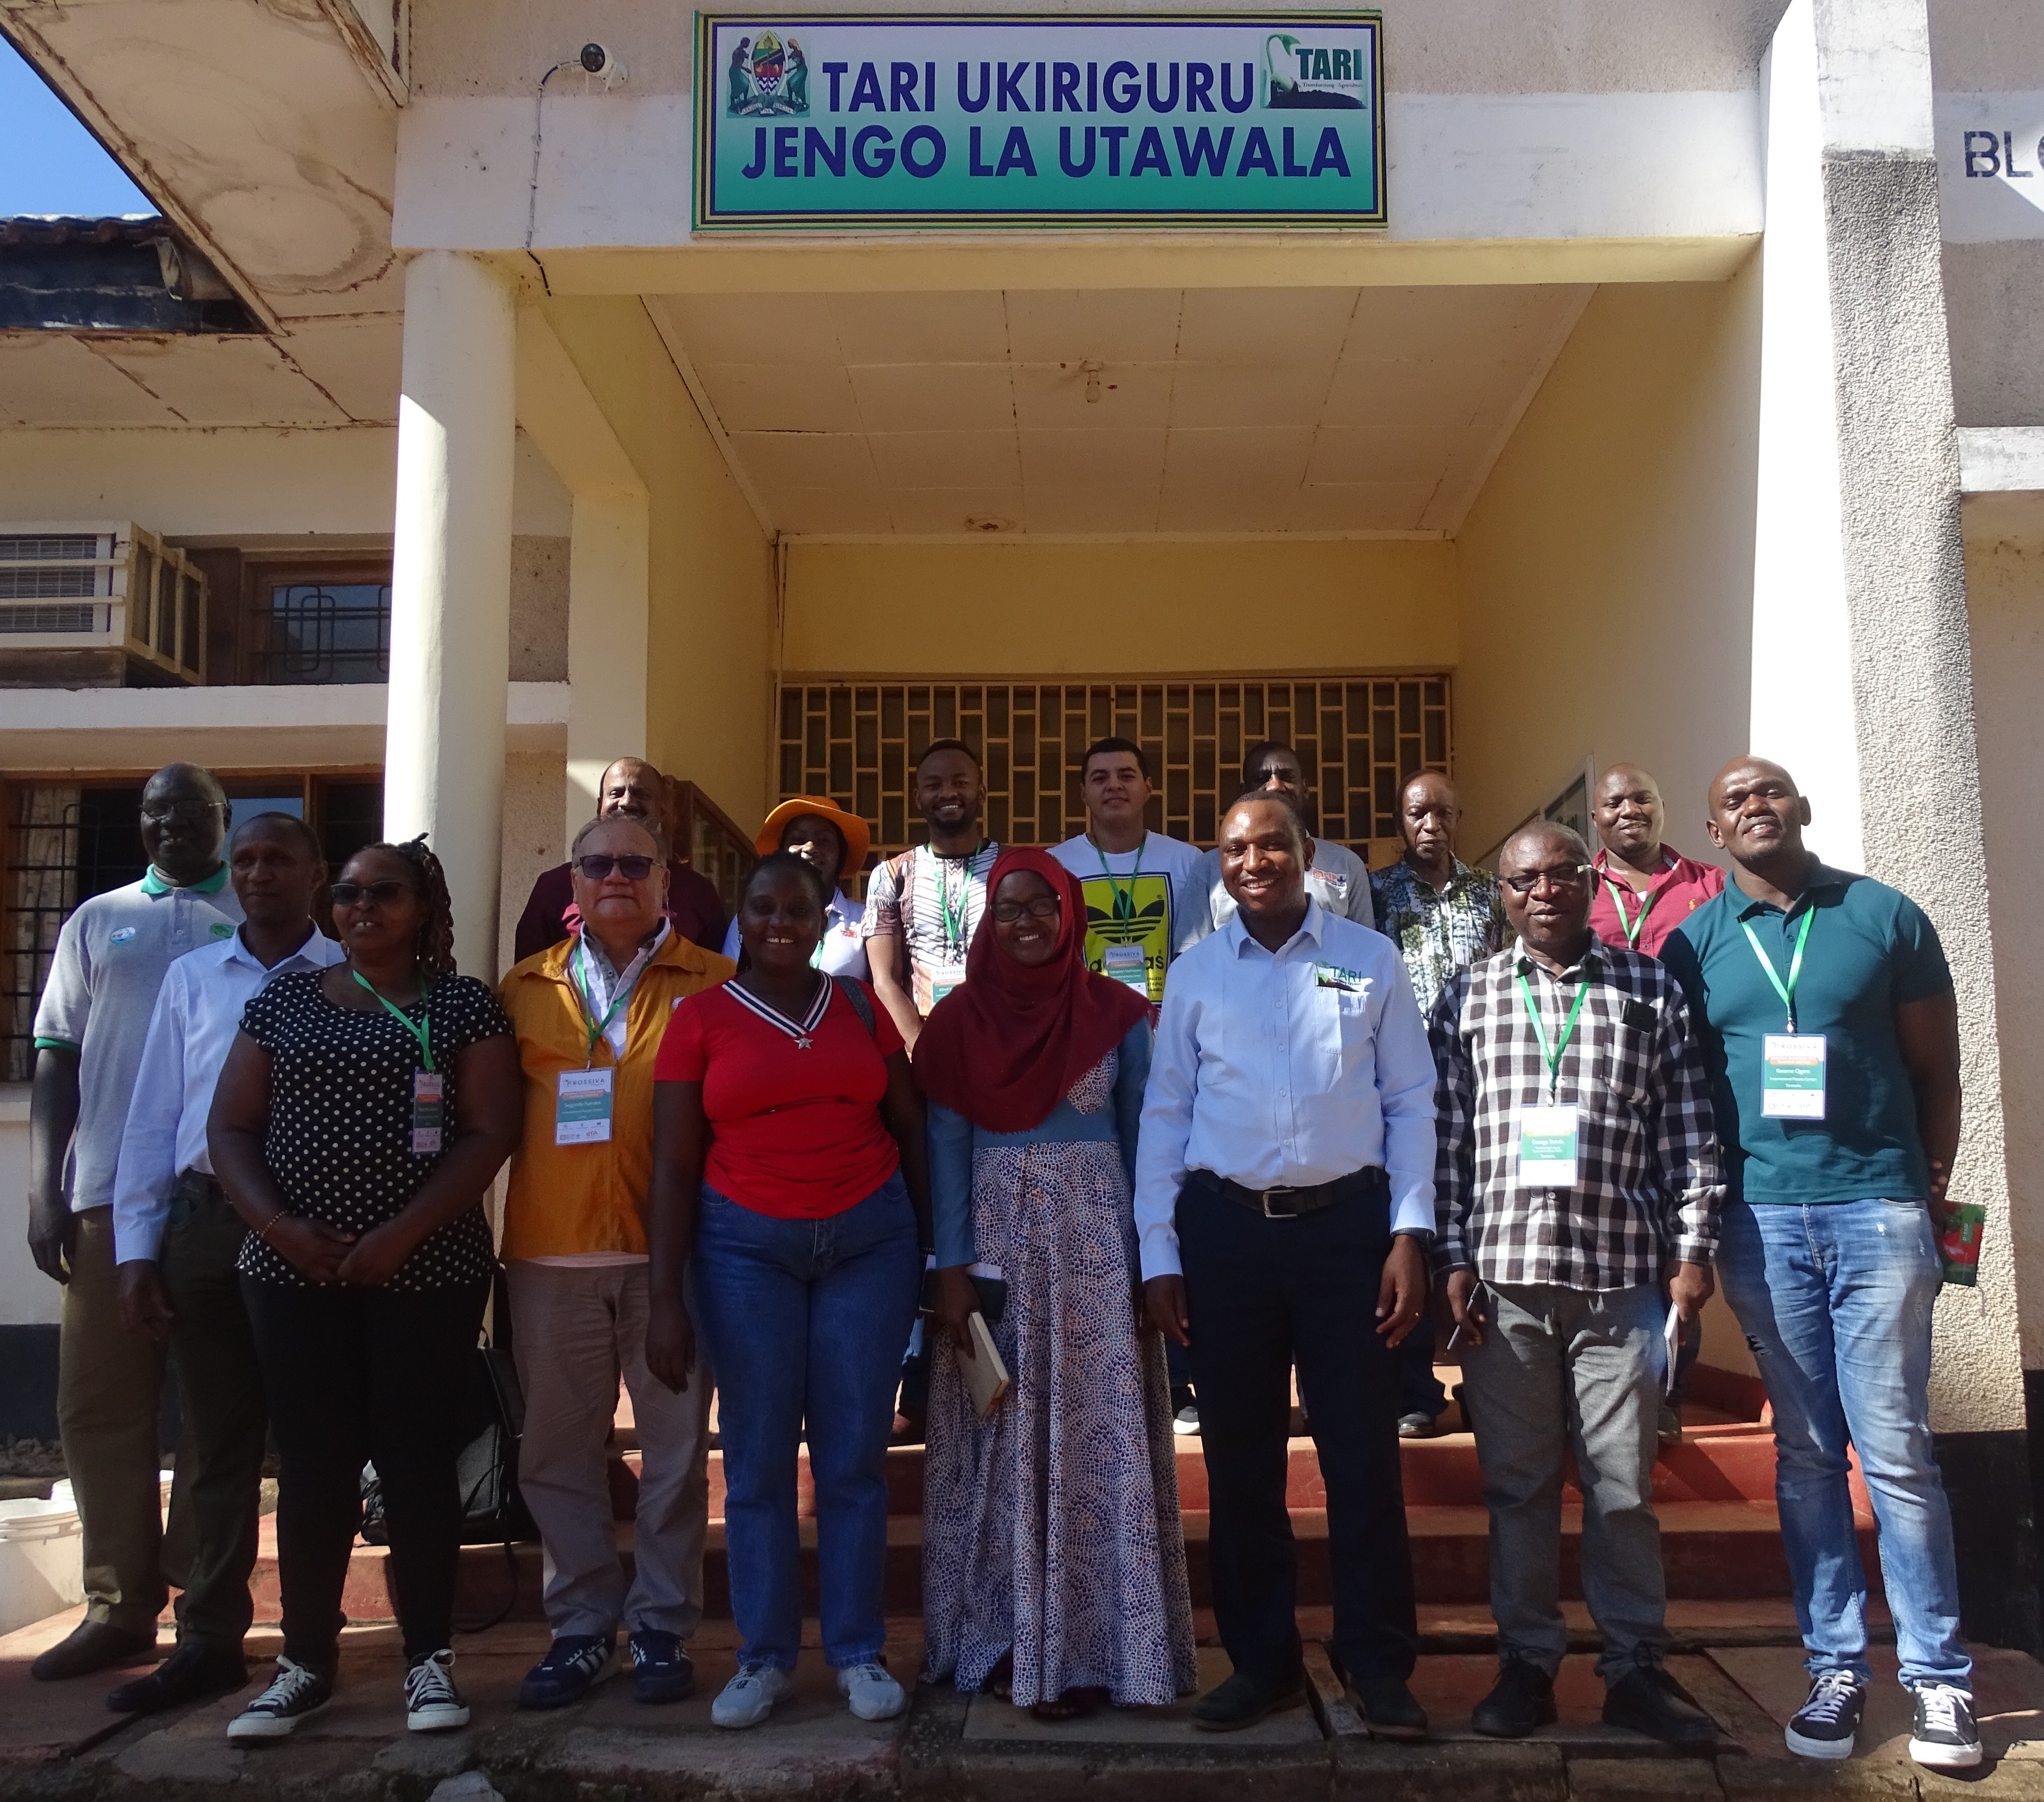 A TEAM OF SCIENTISTS FROM CIP- TANZANIA, CIP-UGANDA, CIP- NAIROBI  AND CIP- PERU IN A GROUP PHOTO WITH TARI UKIRIGURU CENTER DIRECTOR.